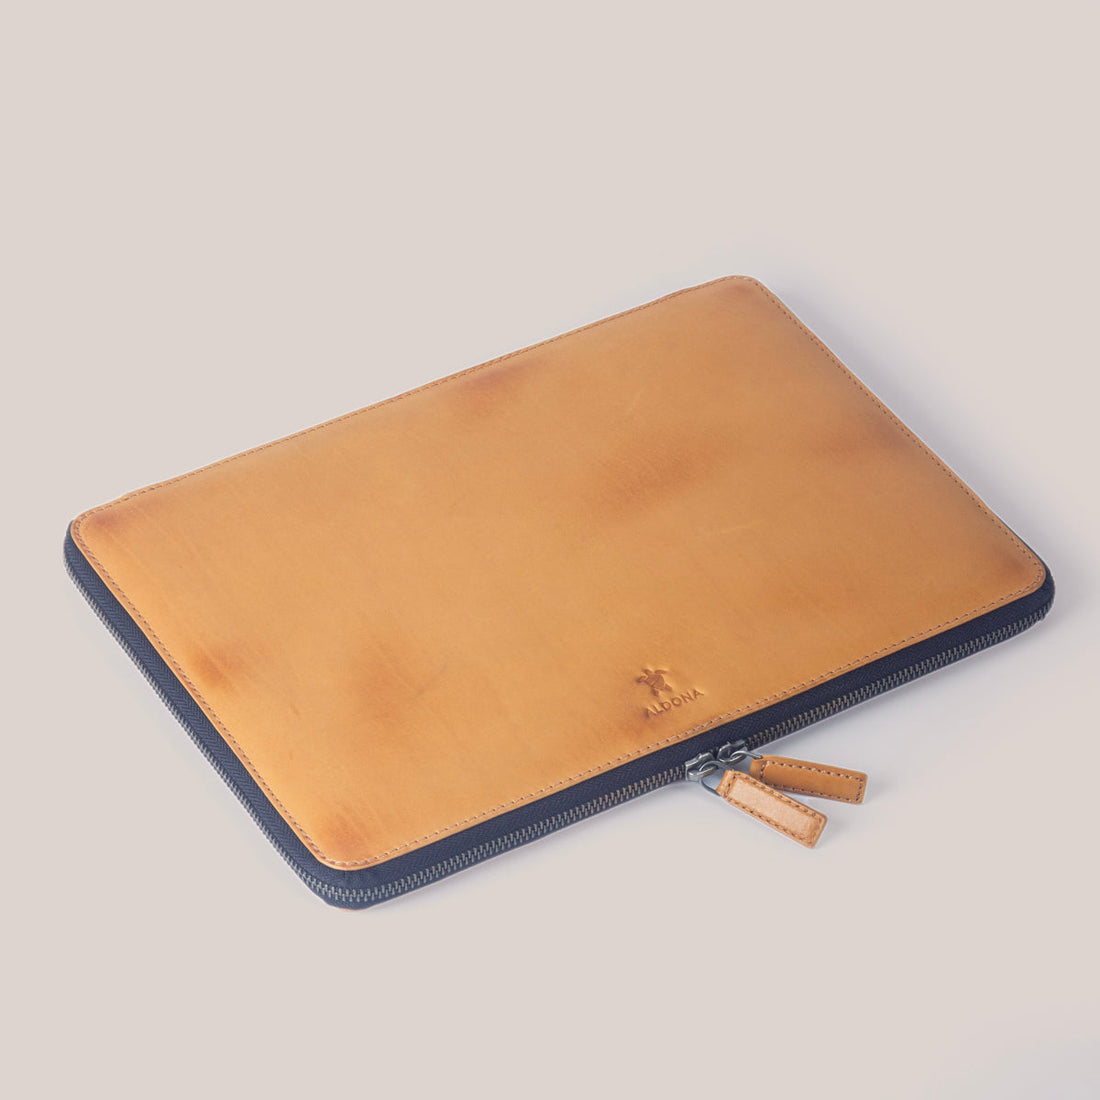 MacBook Pro 13 Zippered Laptop Case - Burnt Tobacco